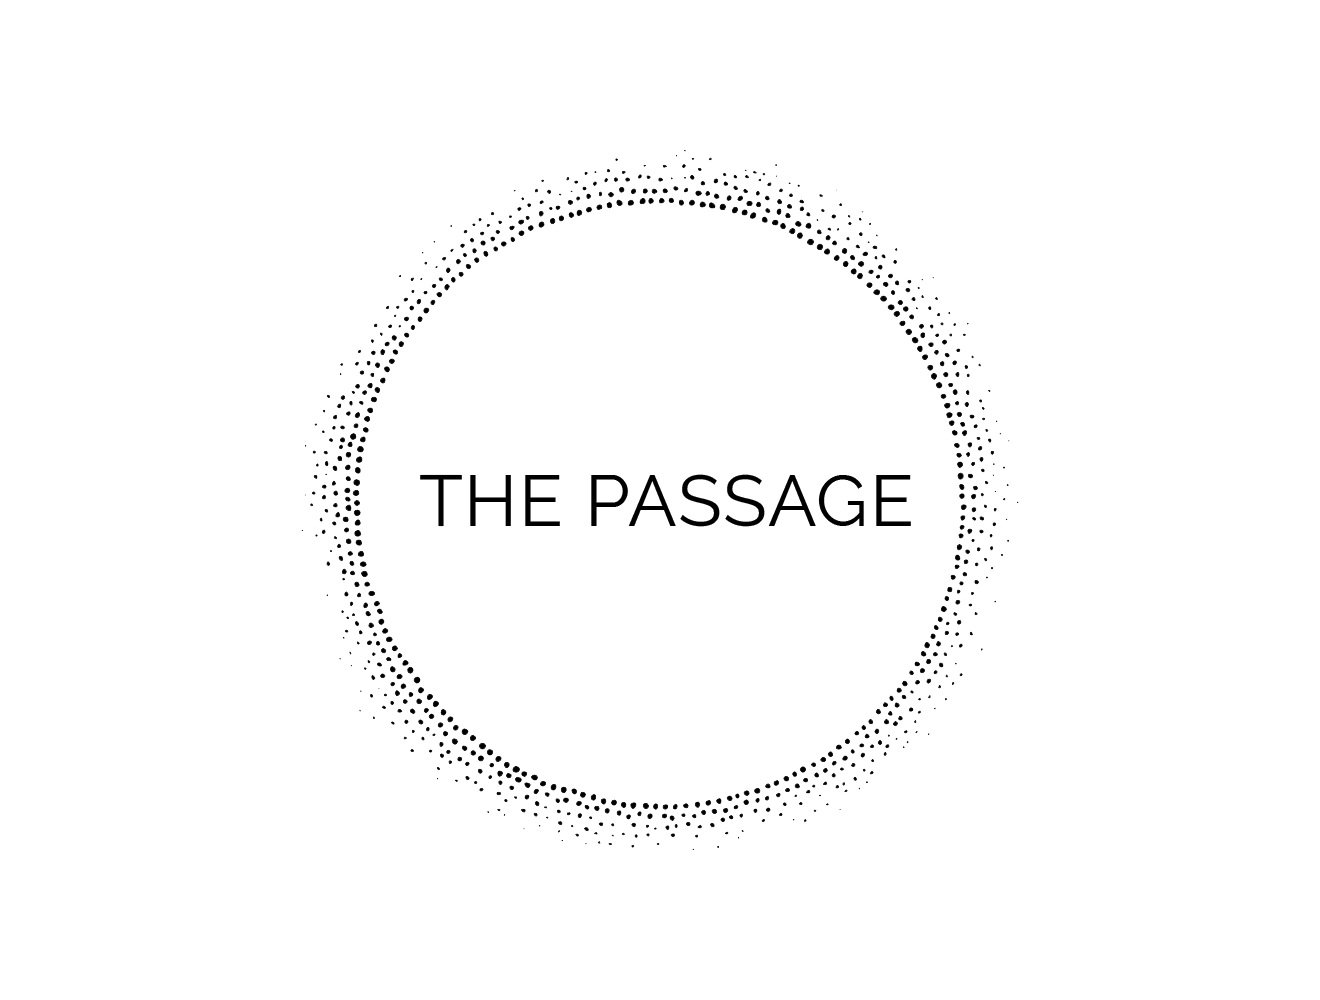 THE PASSAGE